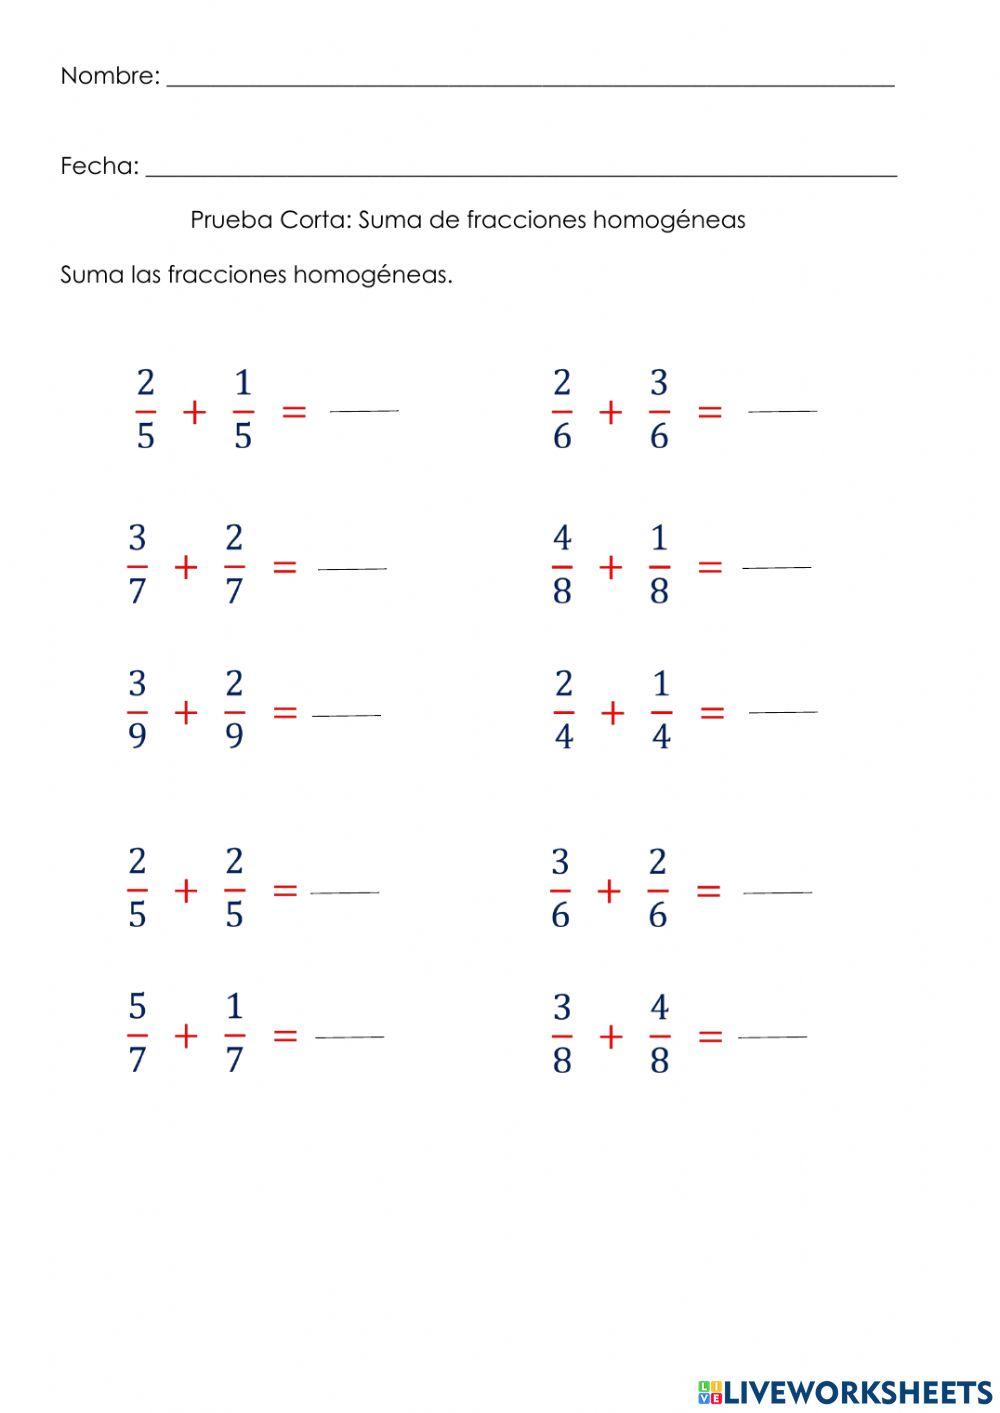 Prueba Corta: Suma de fracciones homogéneas